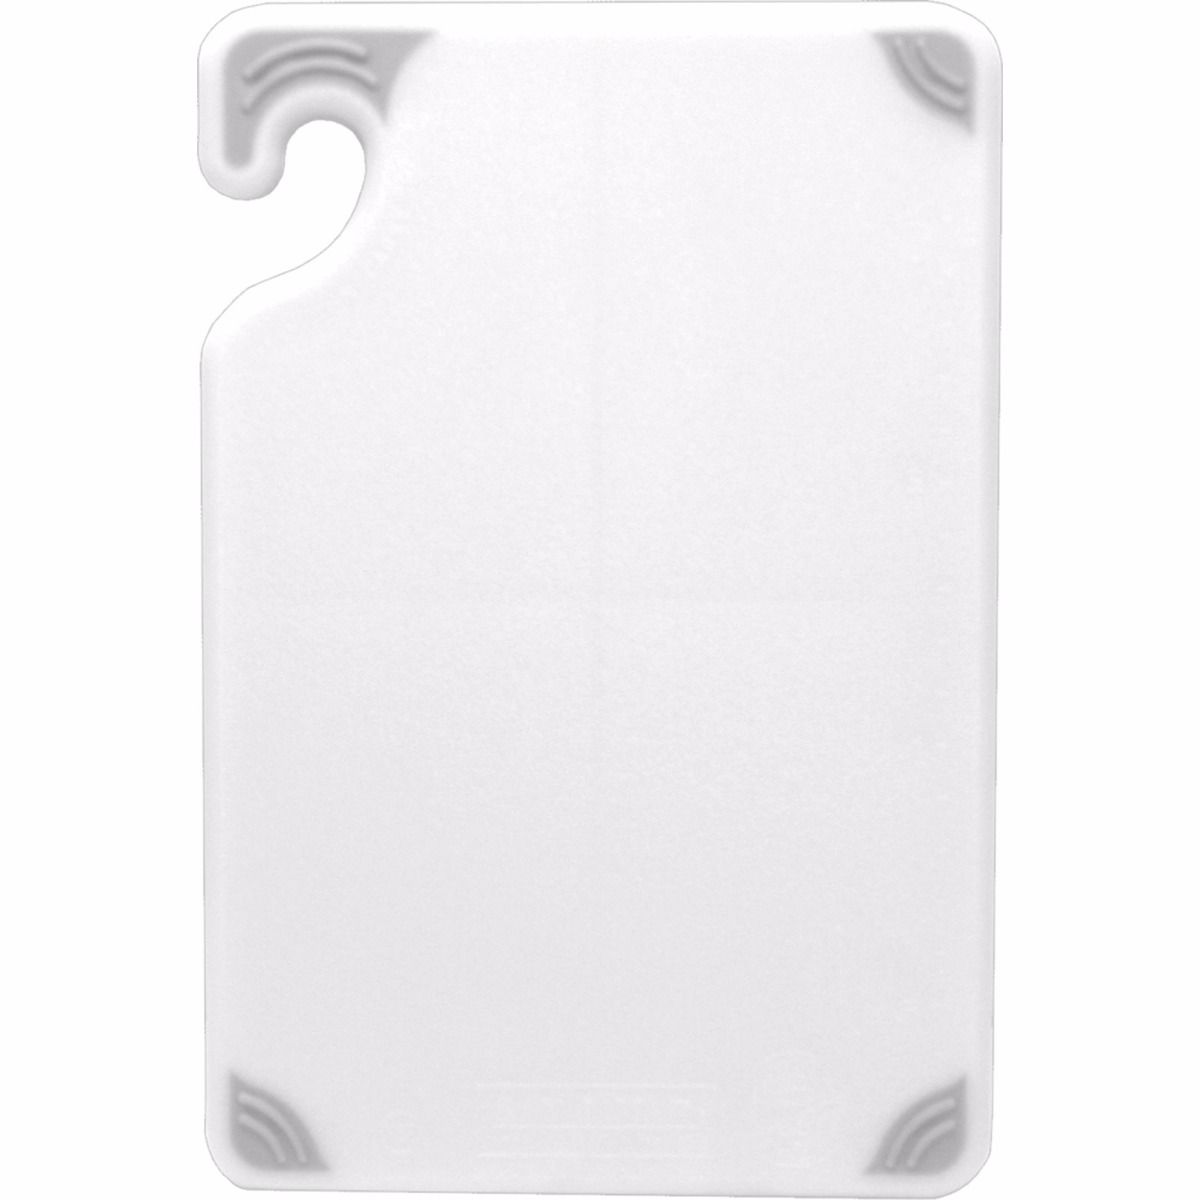 SAN JAMAR CB152012WH Cutting Board,20 x 15 x 1/2 In,White 